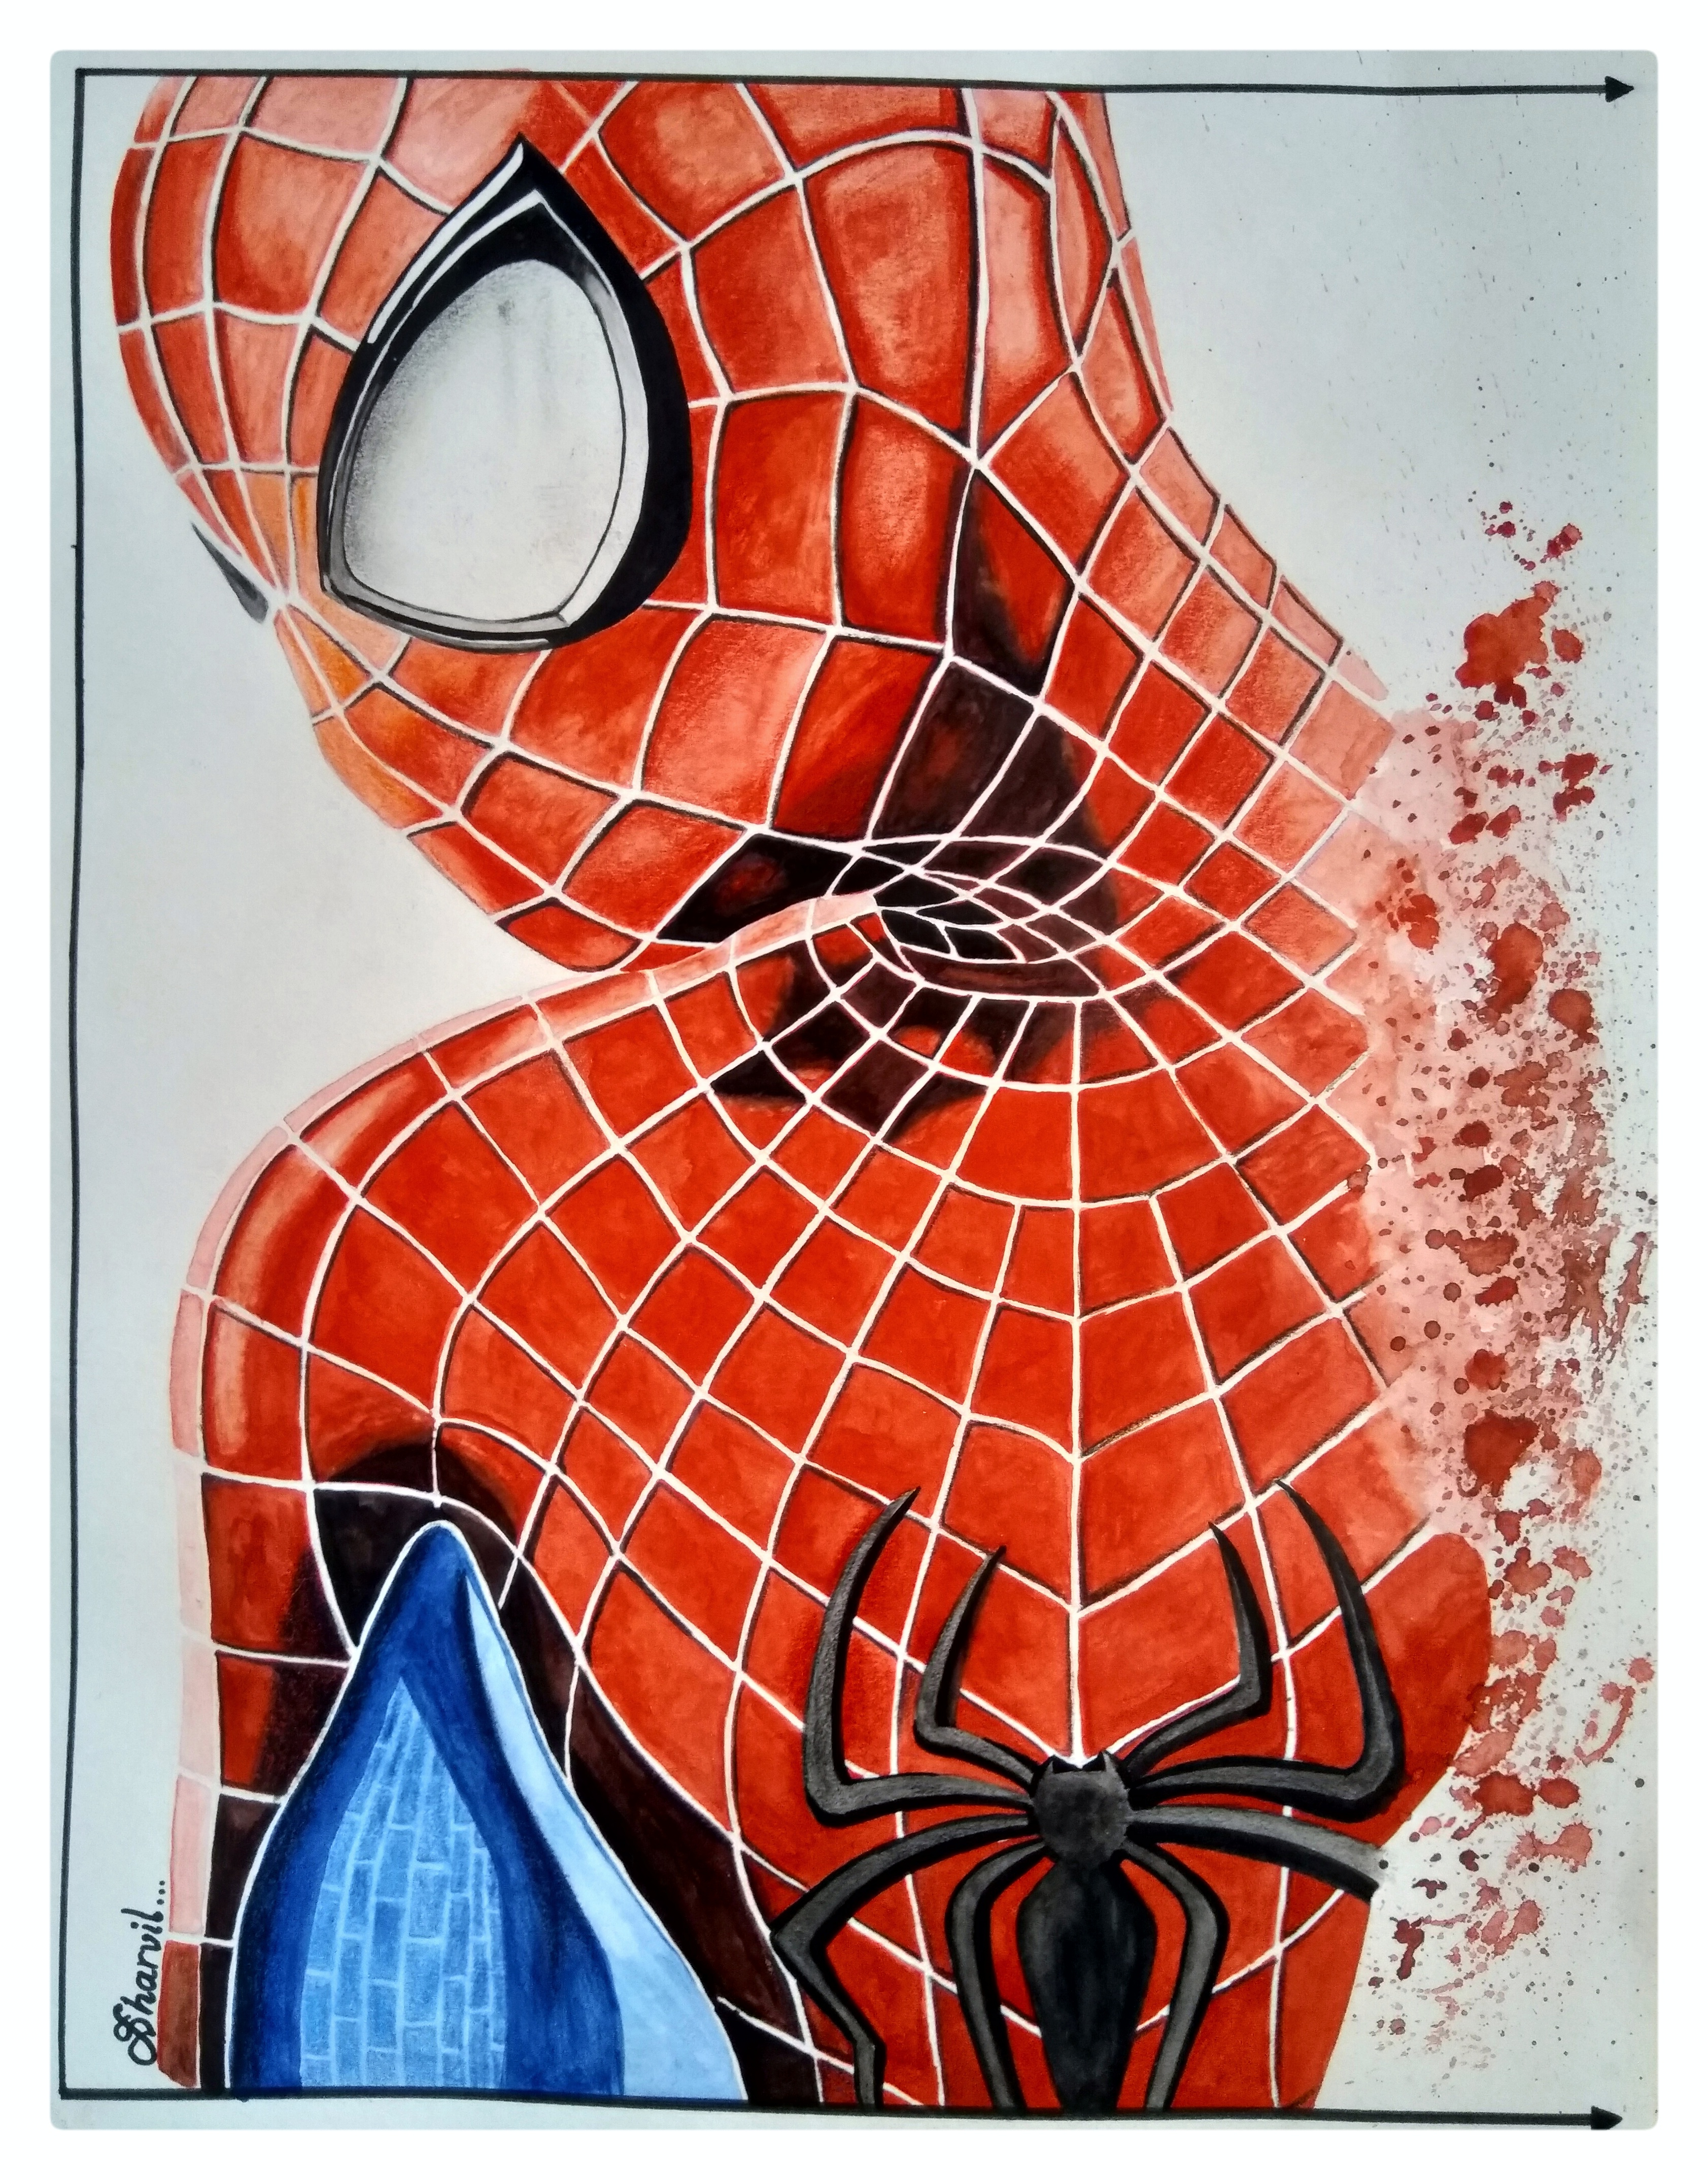 Coloured portrait sketch of Spiderman